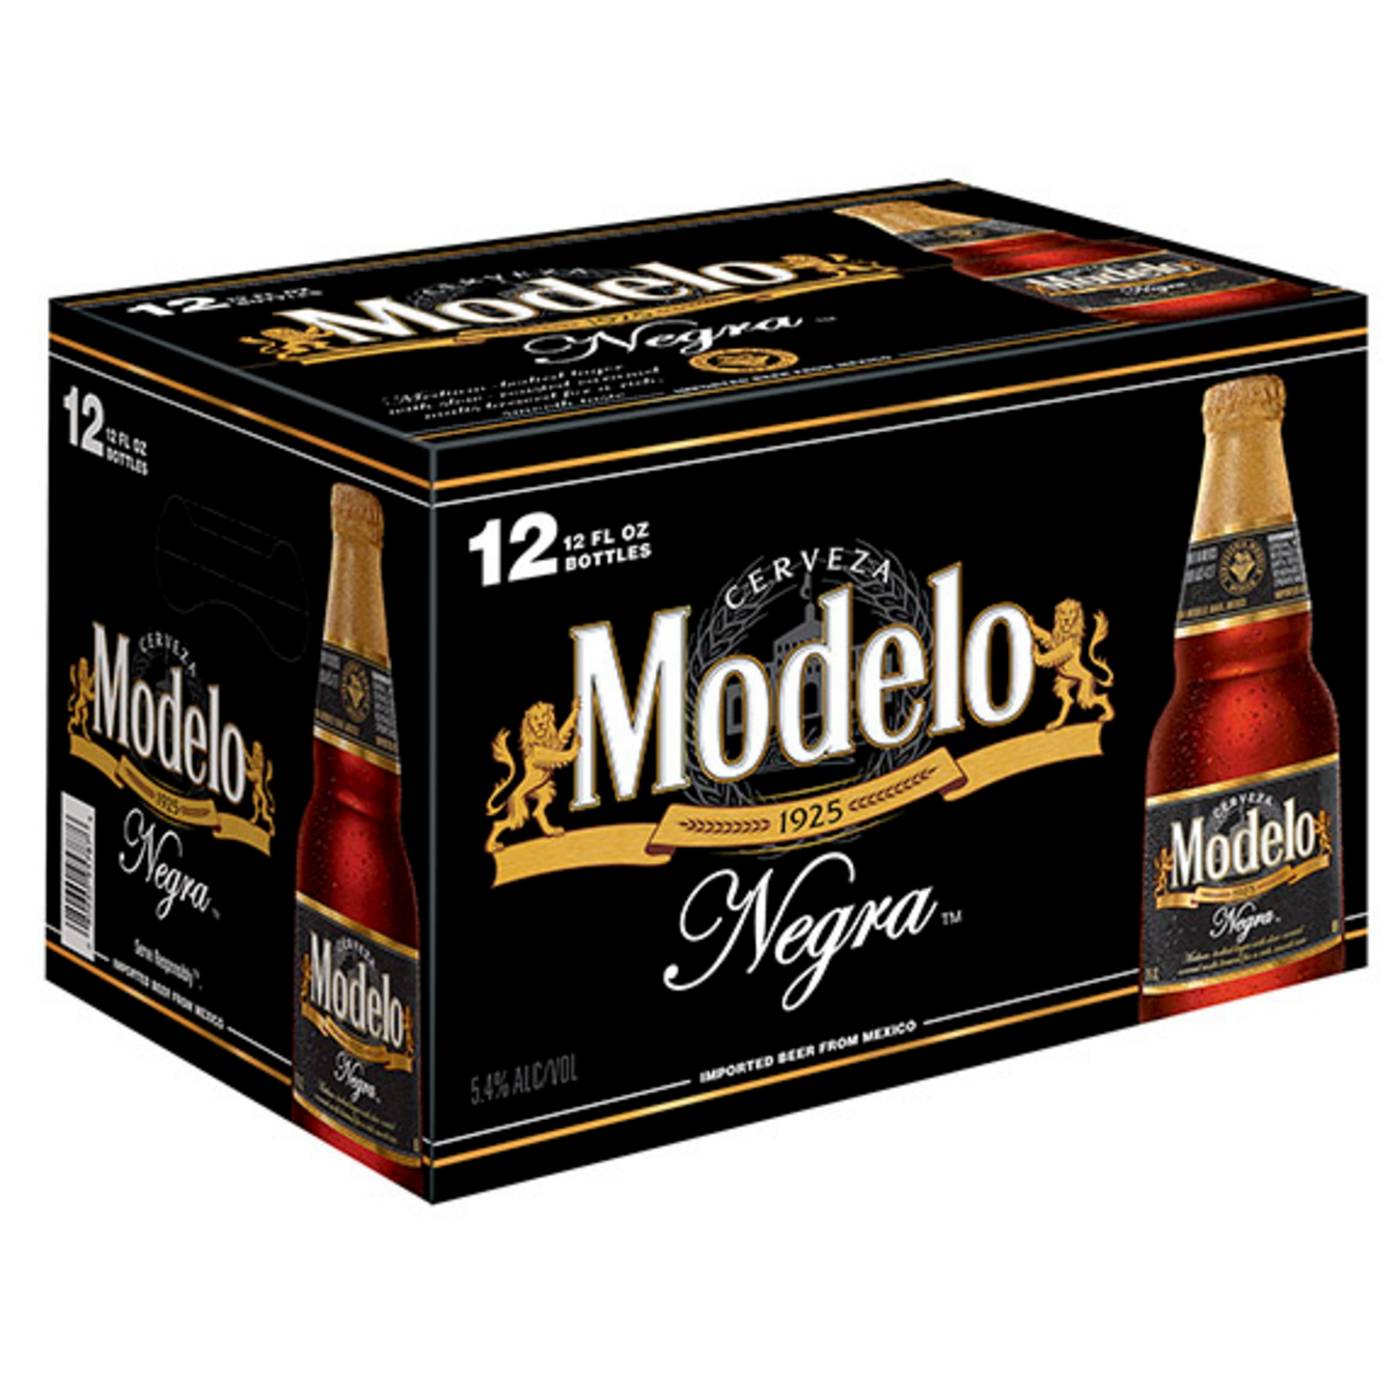 Modelo Negra Amber Lager Mexican Import Beer 12 oz Bottles, 12 pk; image 1 of 9